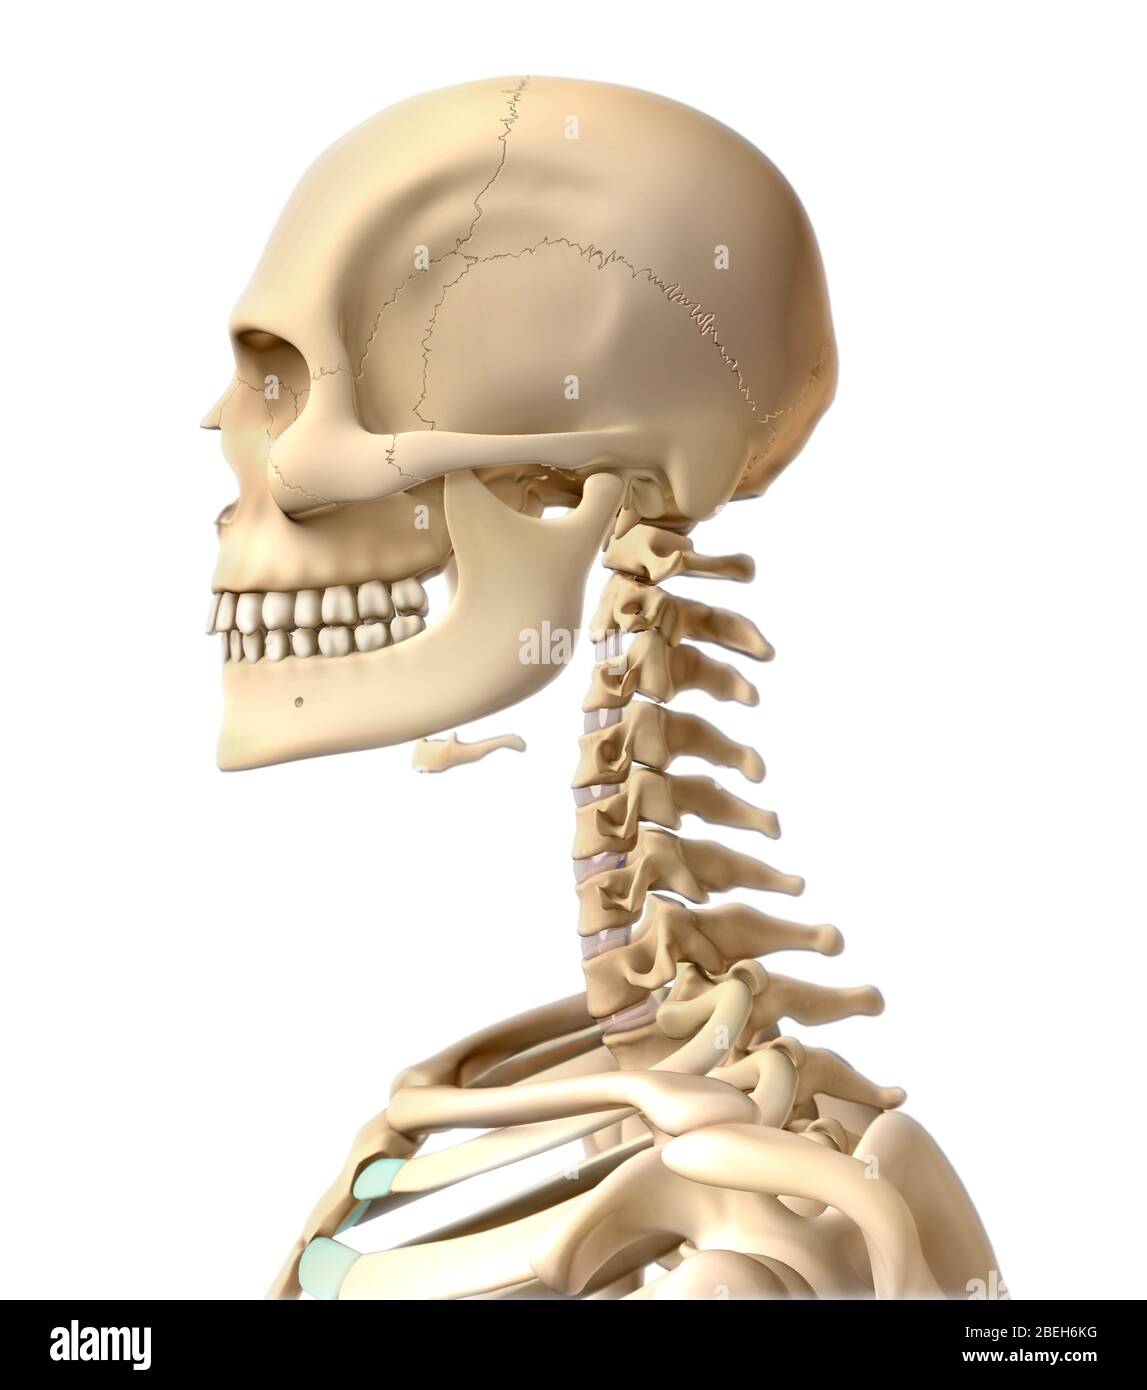 Scheletro umano, testa e collo Foto stock - Alamy